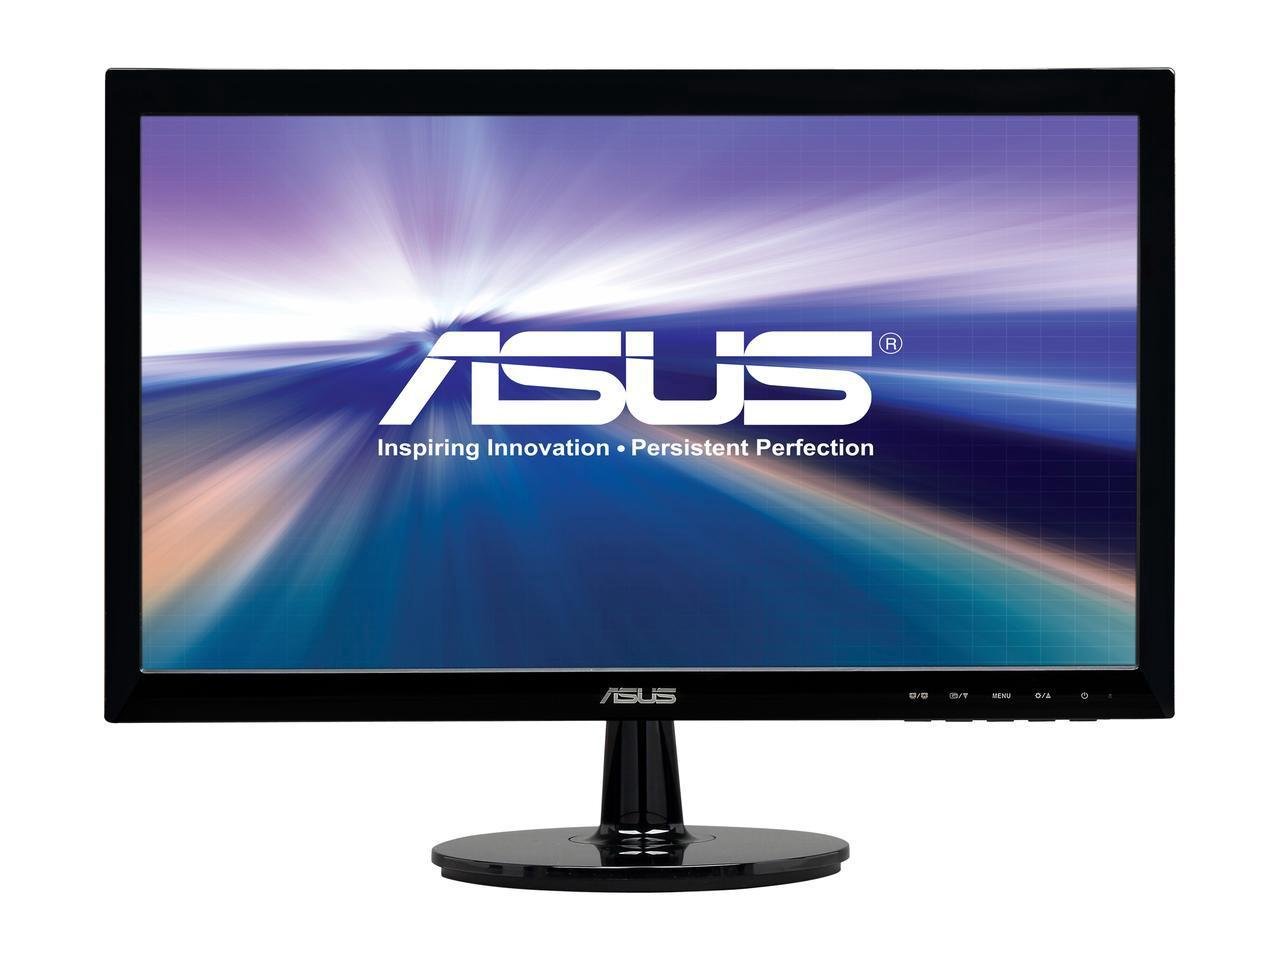 ASUS VS207D-P Black 19.5" 5ms Widescreen LED Backlight LCD Monitor